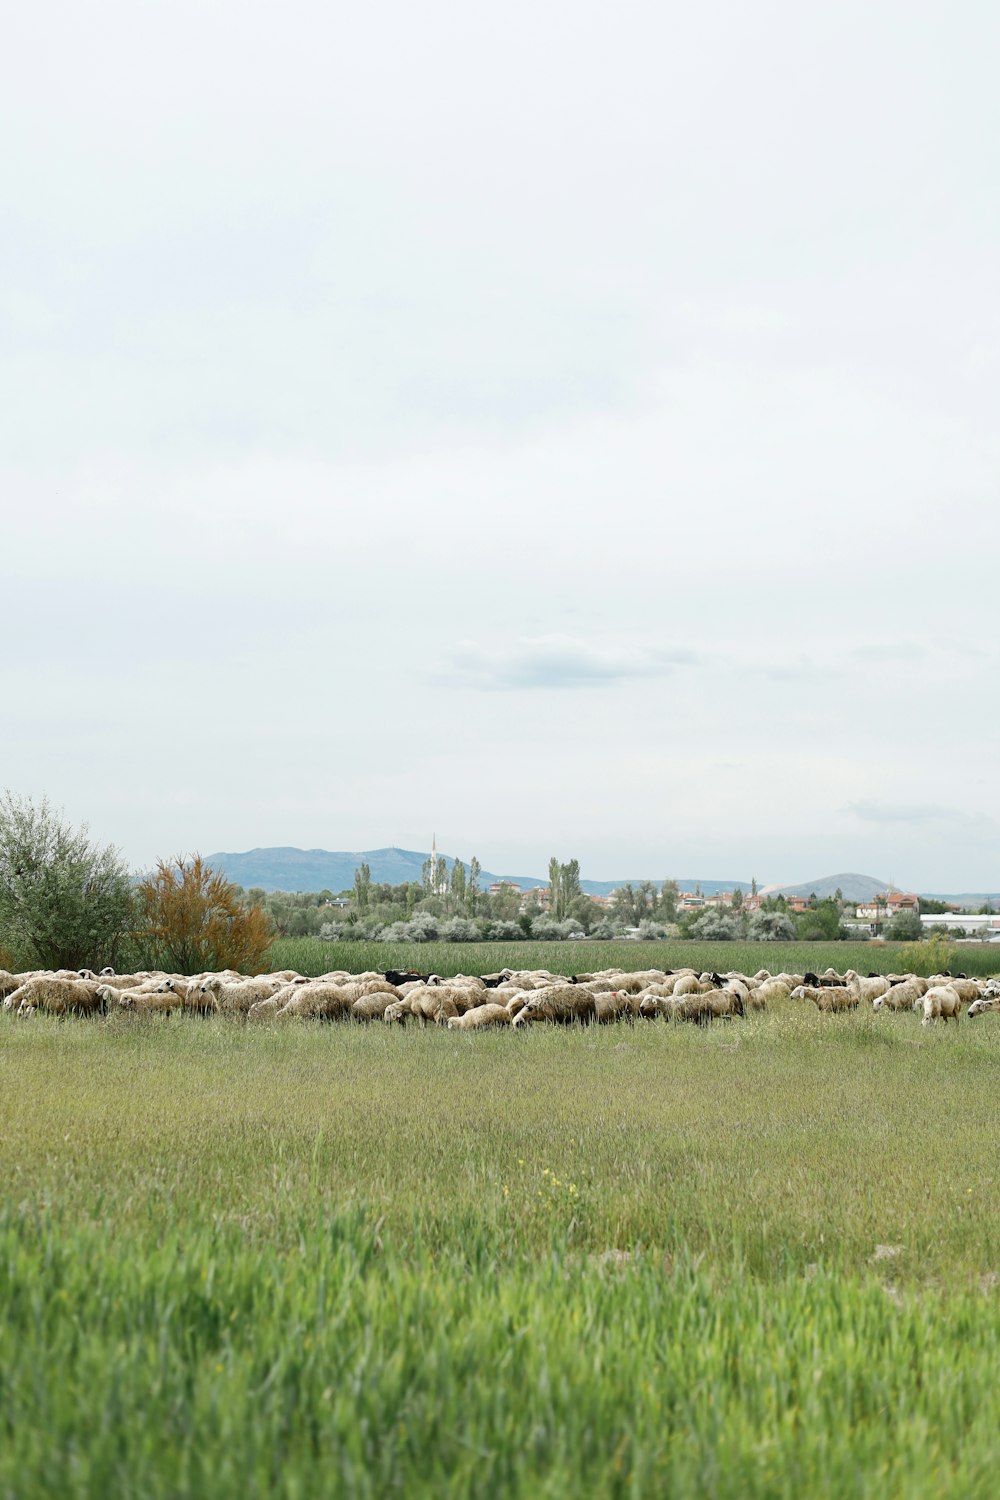 a herd of sheep walking across a lush green field